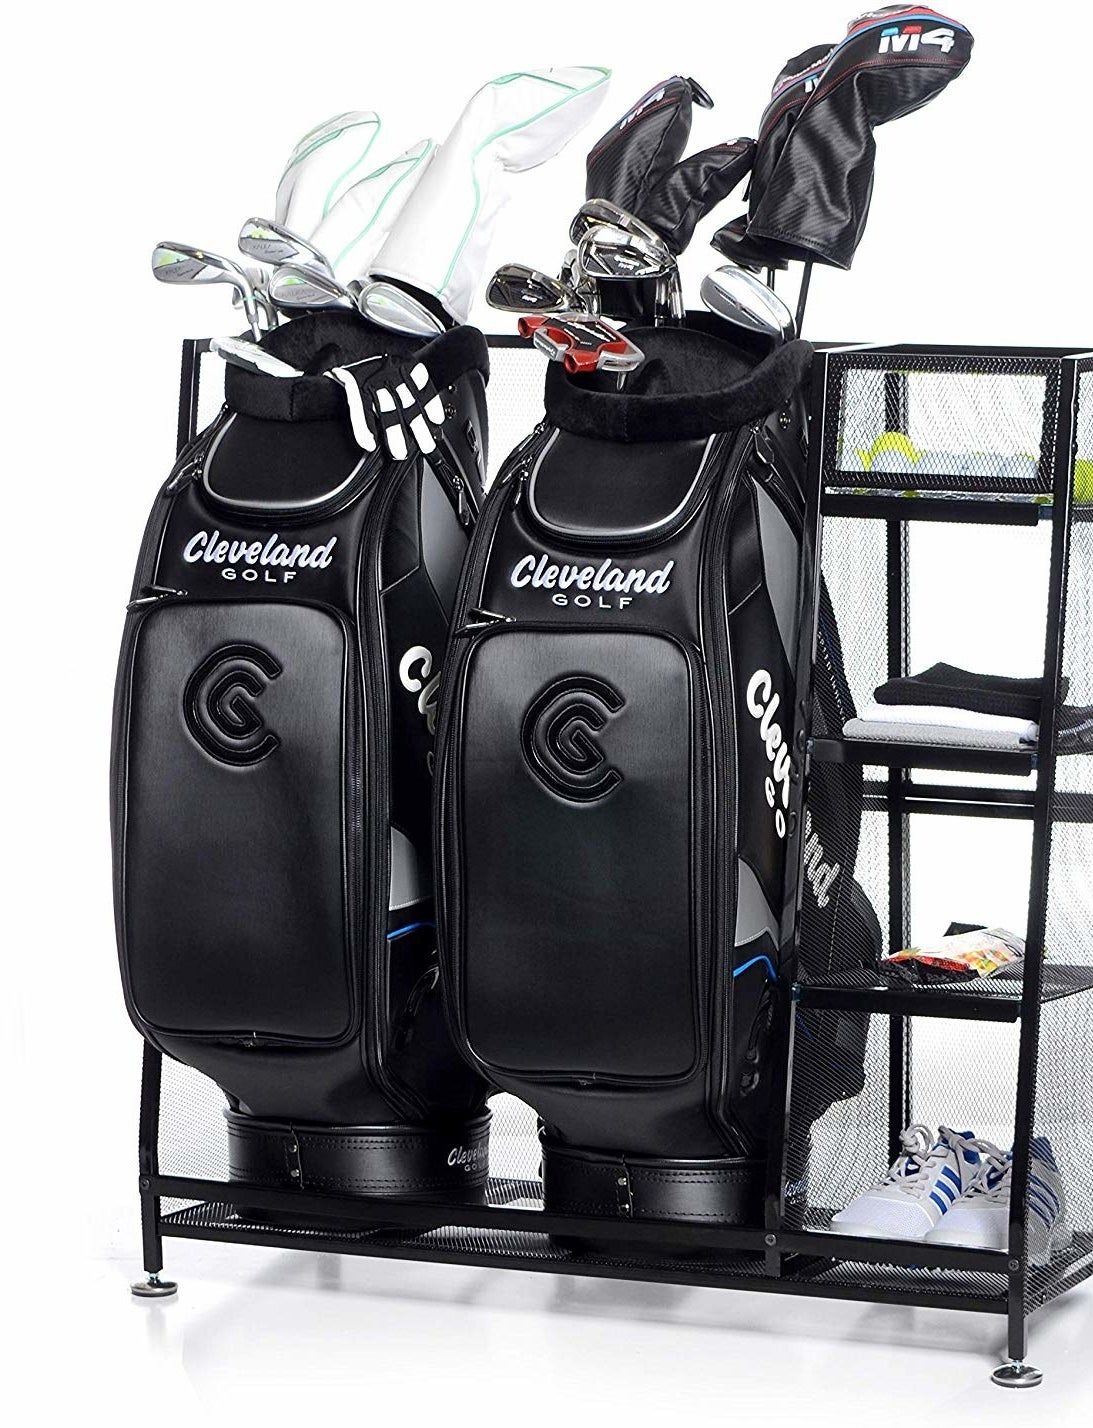 rack storing two full golf bags full of equipment, plus four shelves storing shoes, balls, or extra items